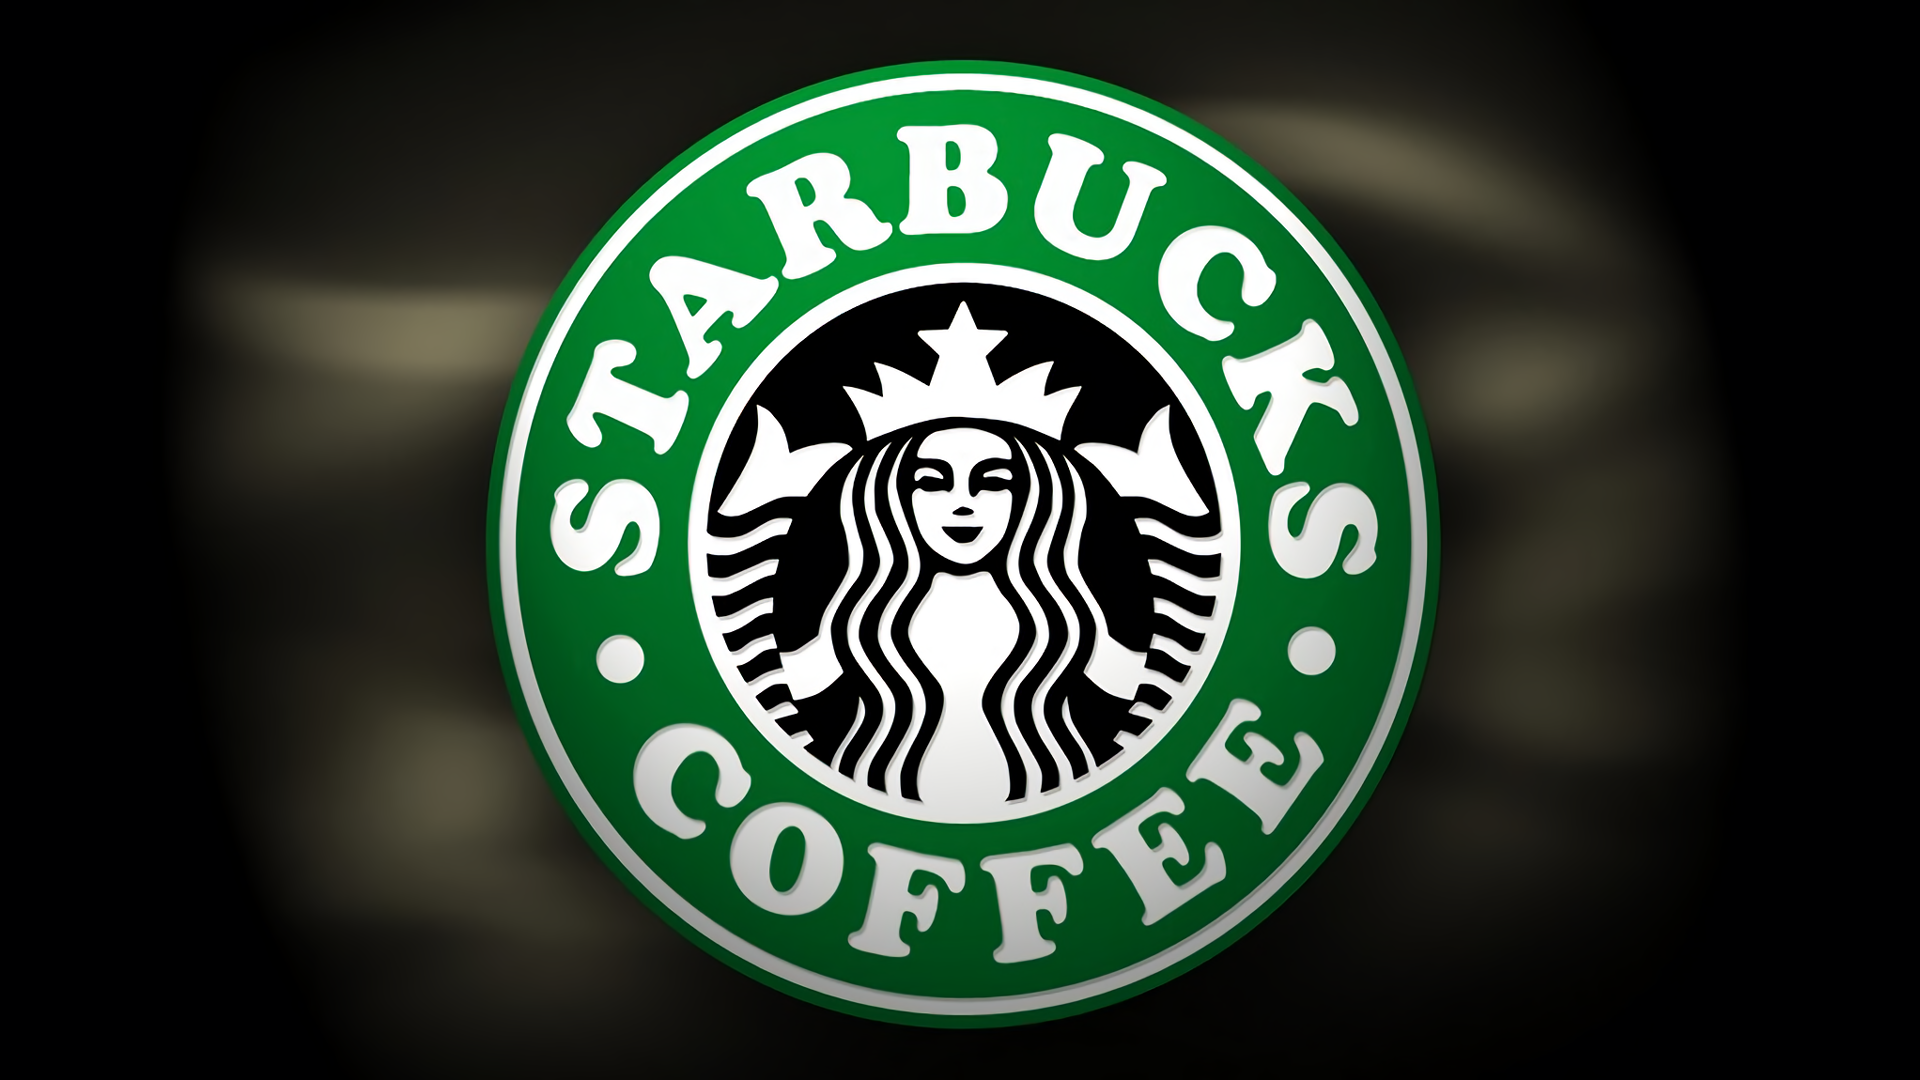 Starbucks coffee logo wallpaper by rikignjr123  Download on ZEDGE  607f